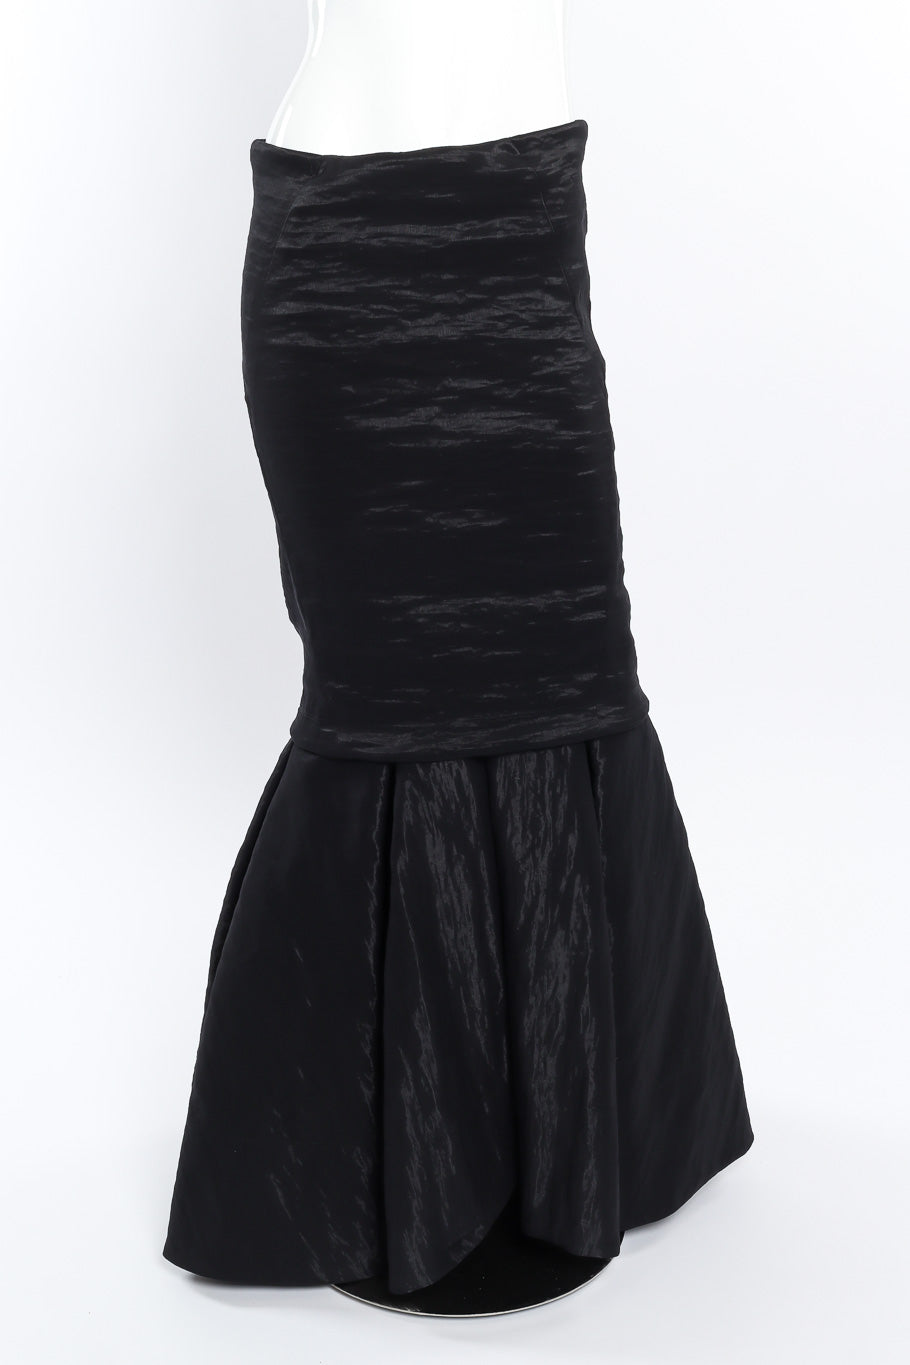 Evening set by Donna Karan on mannequin skirt only @recessla